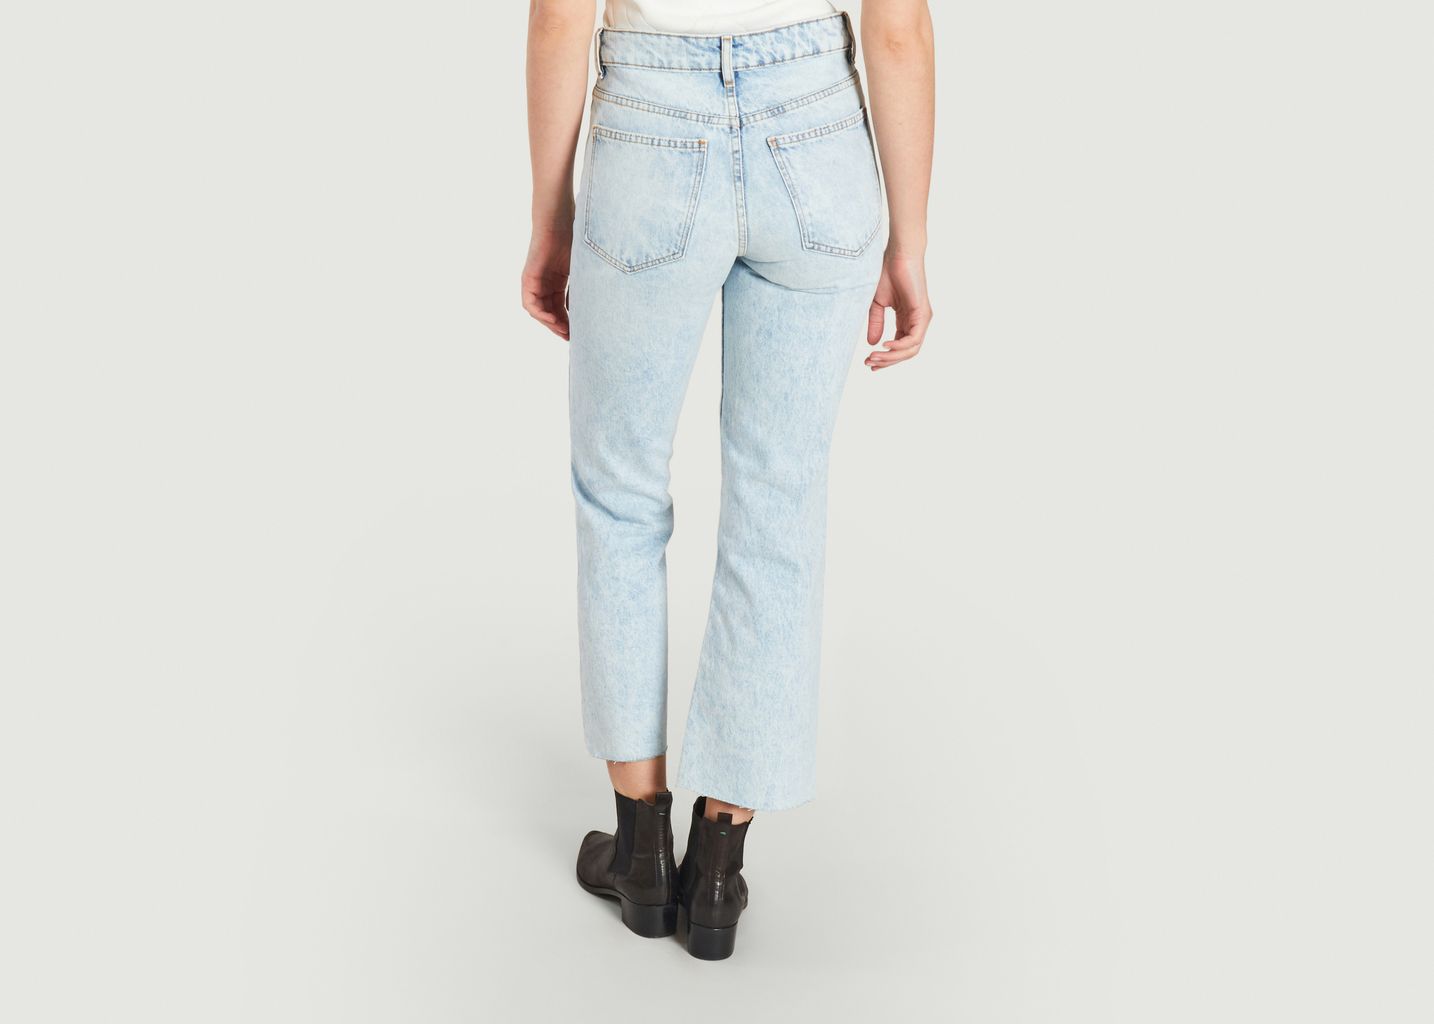 Briollay jeans - IRO